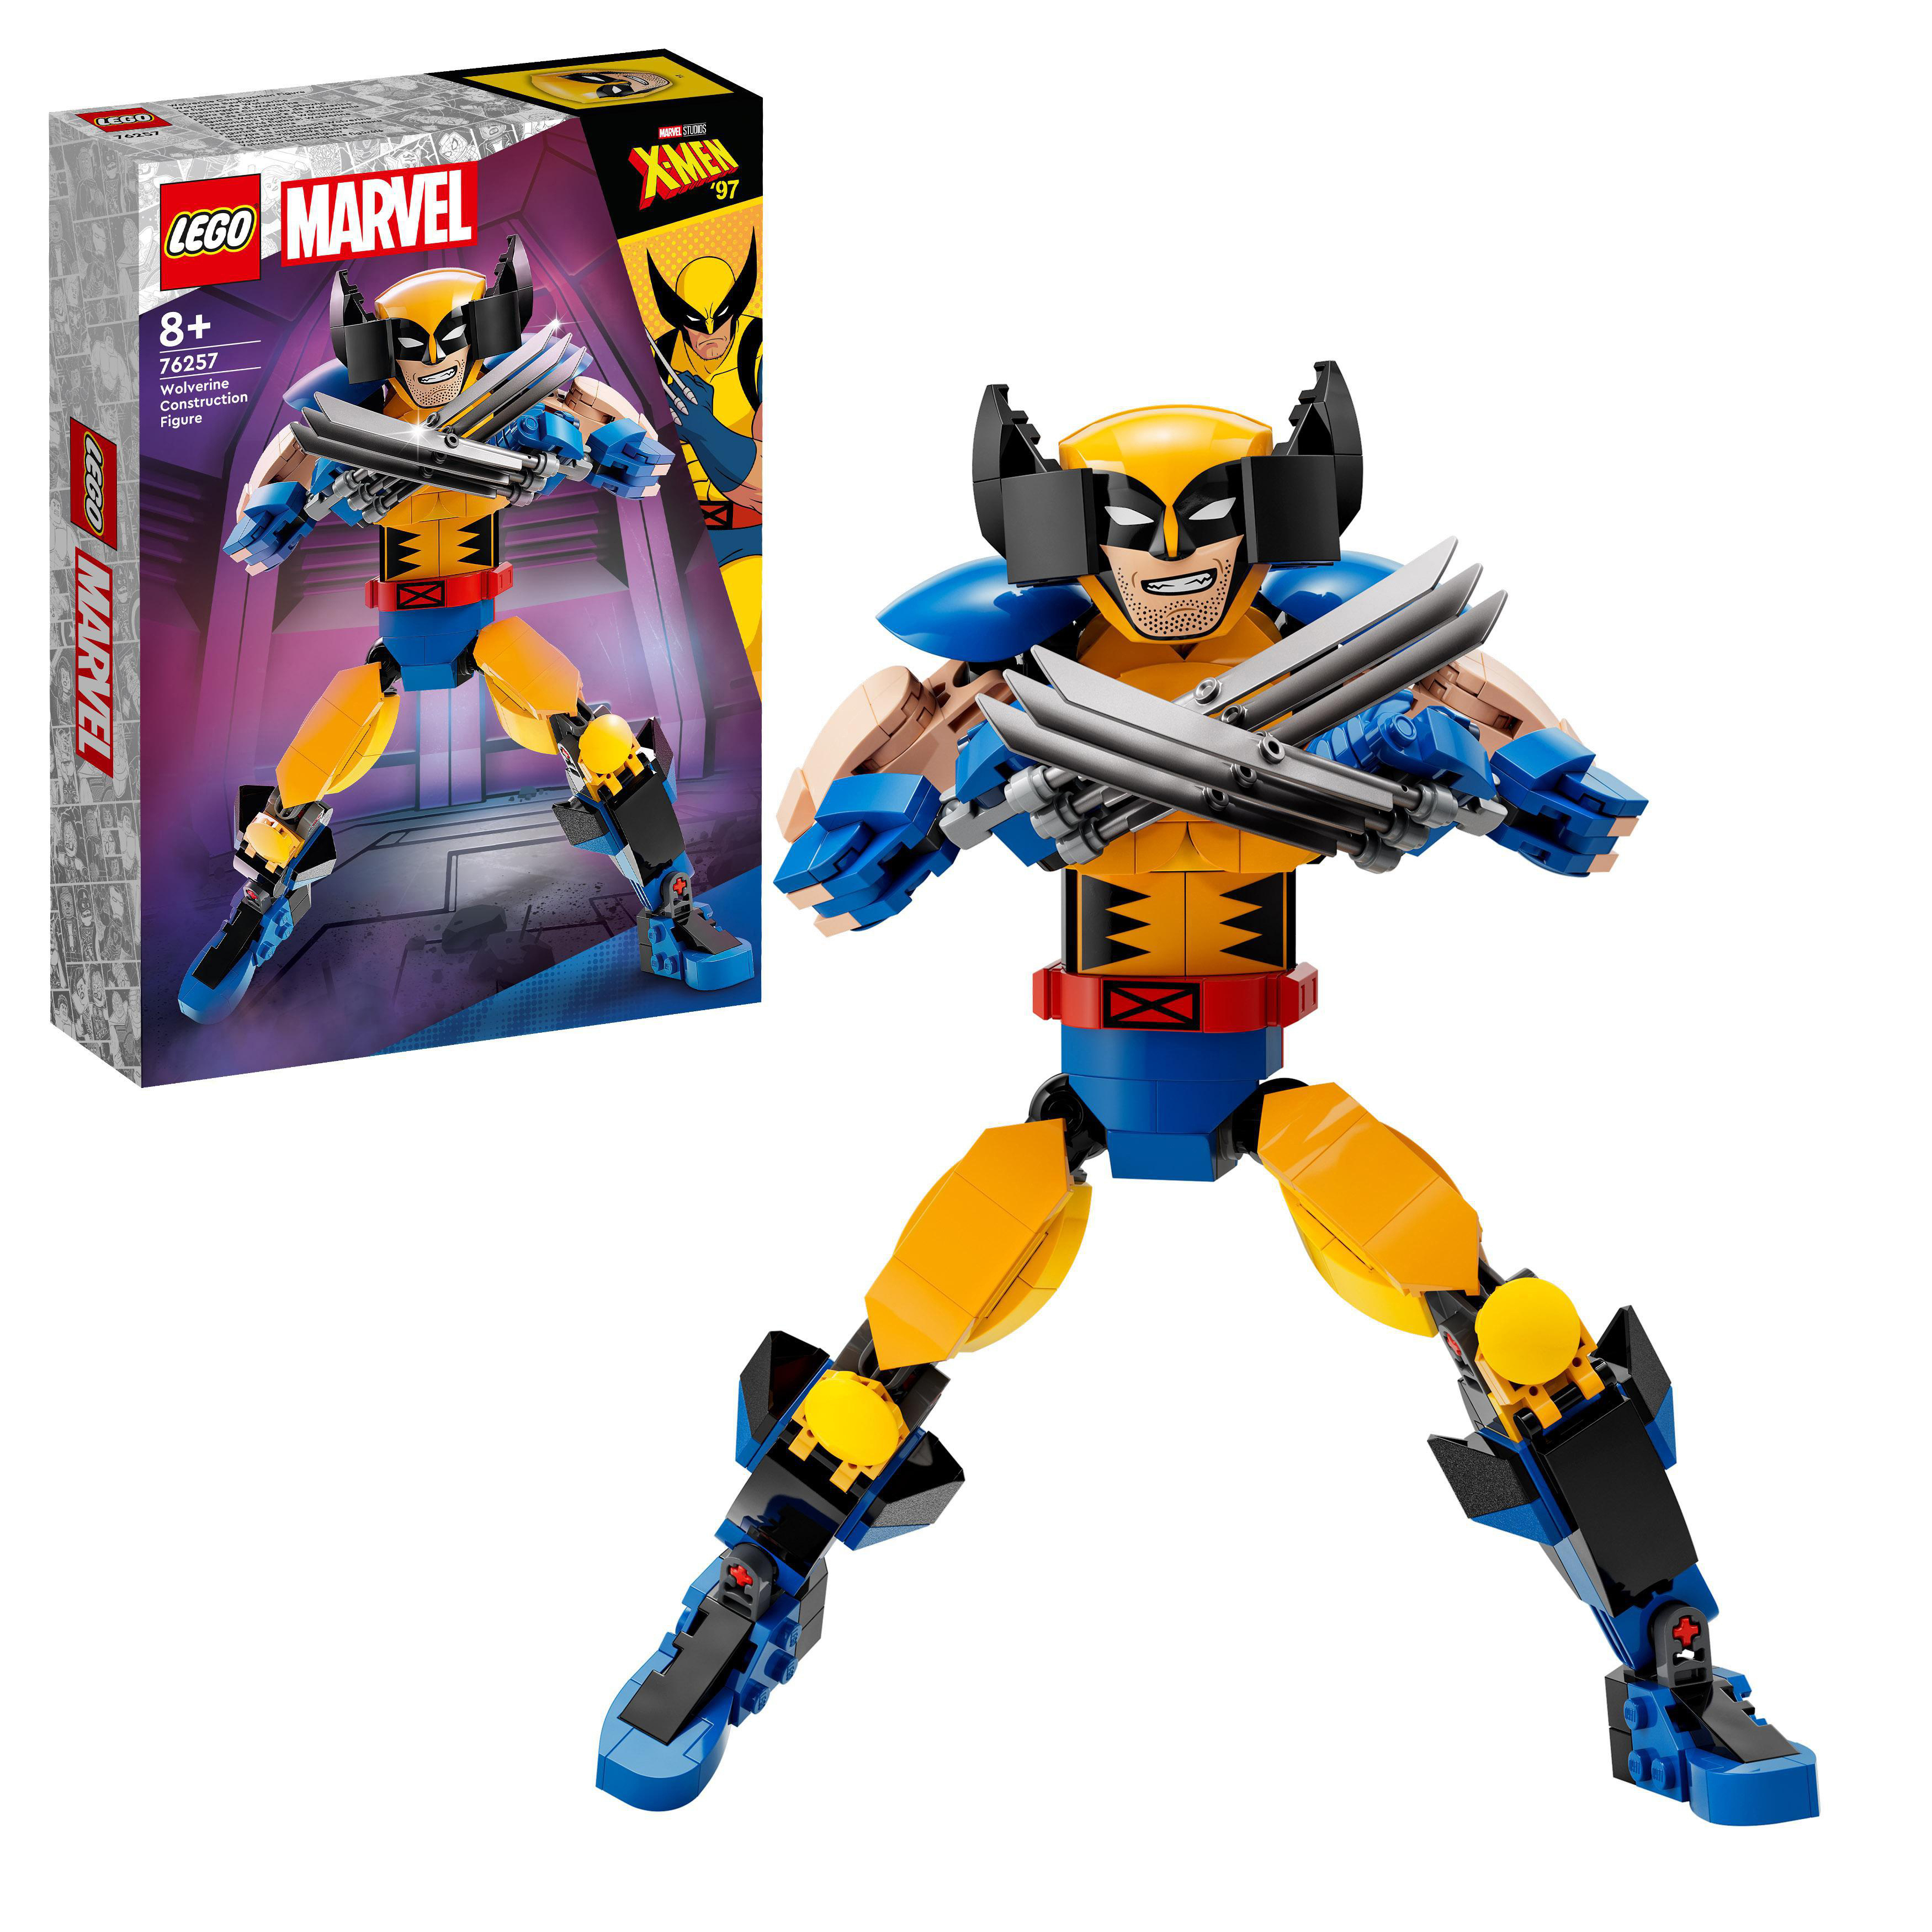 Wolverine 76257 Baufigur Mehrfarbig Marvel Bausatz, LEGO